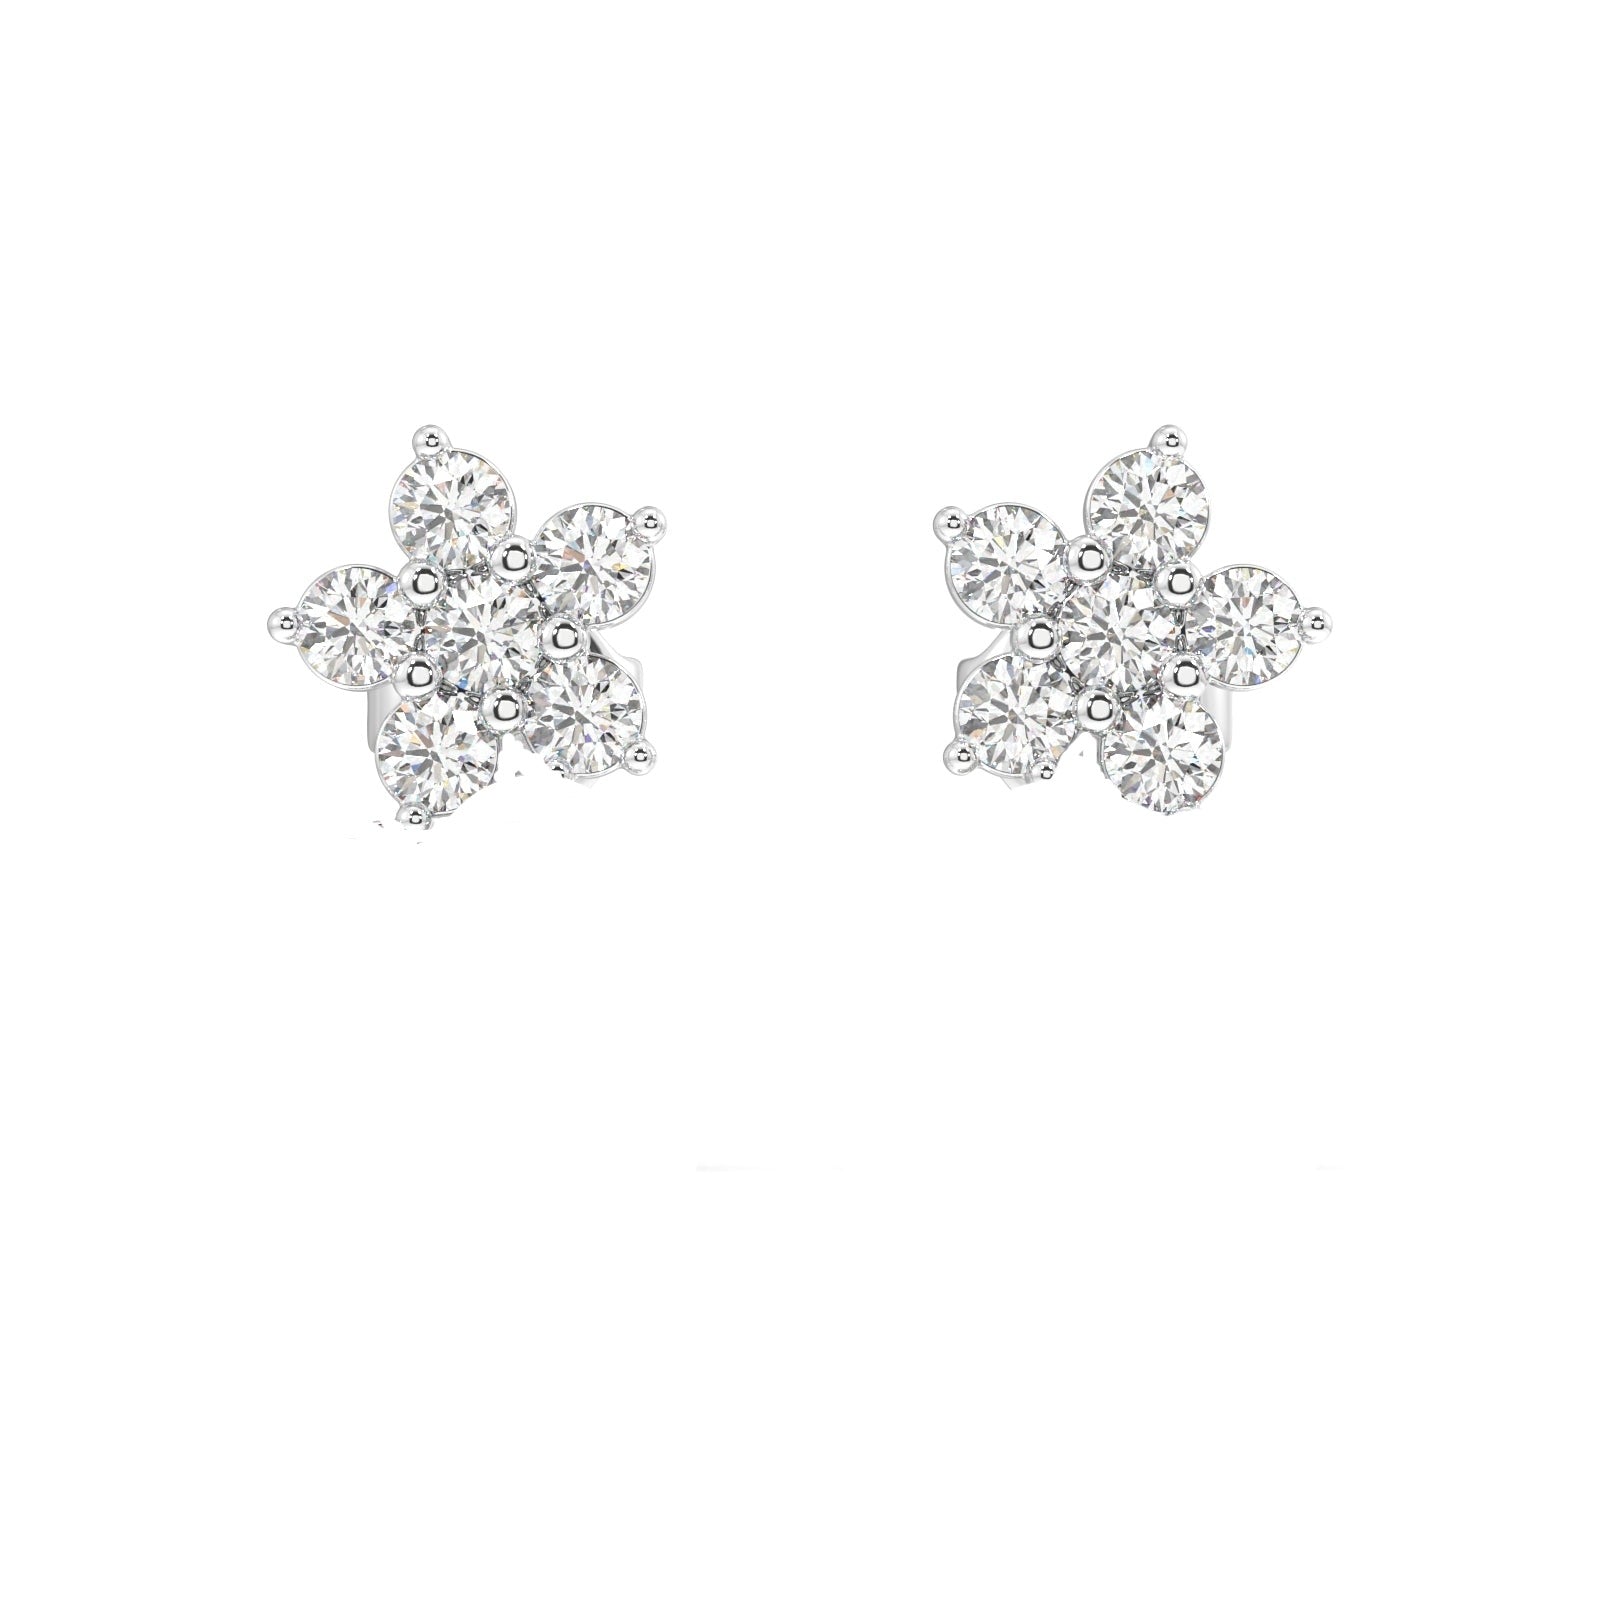 "Front View of Sterling Silver Five-Petal Flower Stud Earrings"